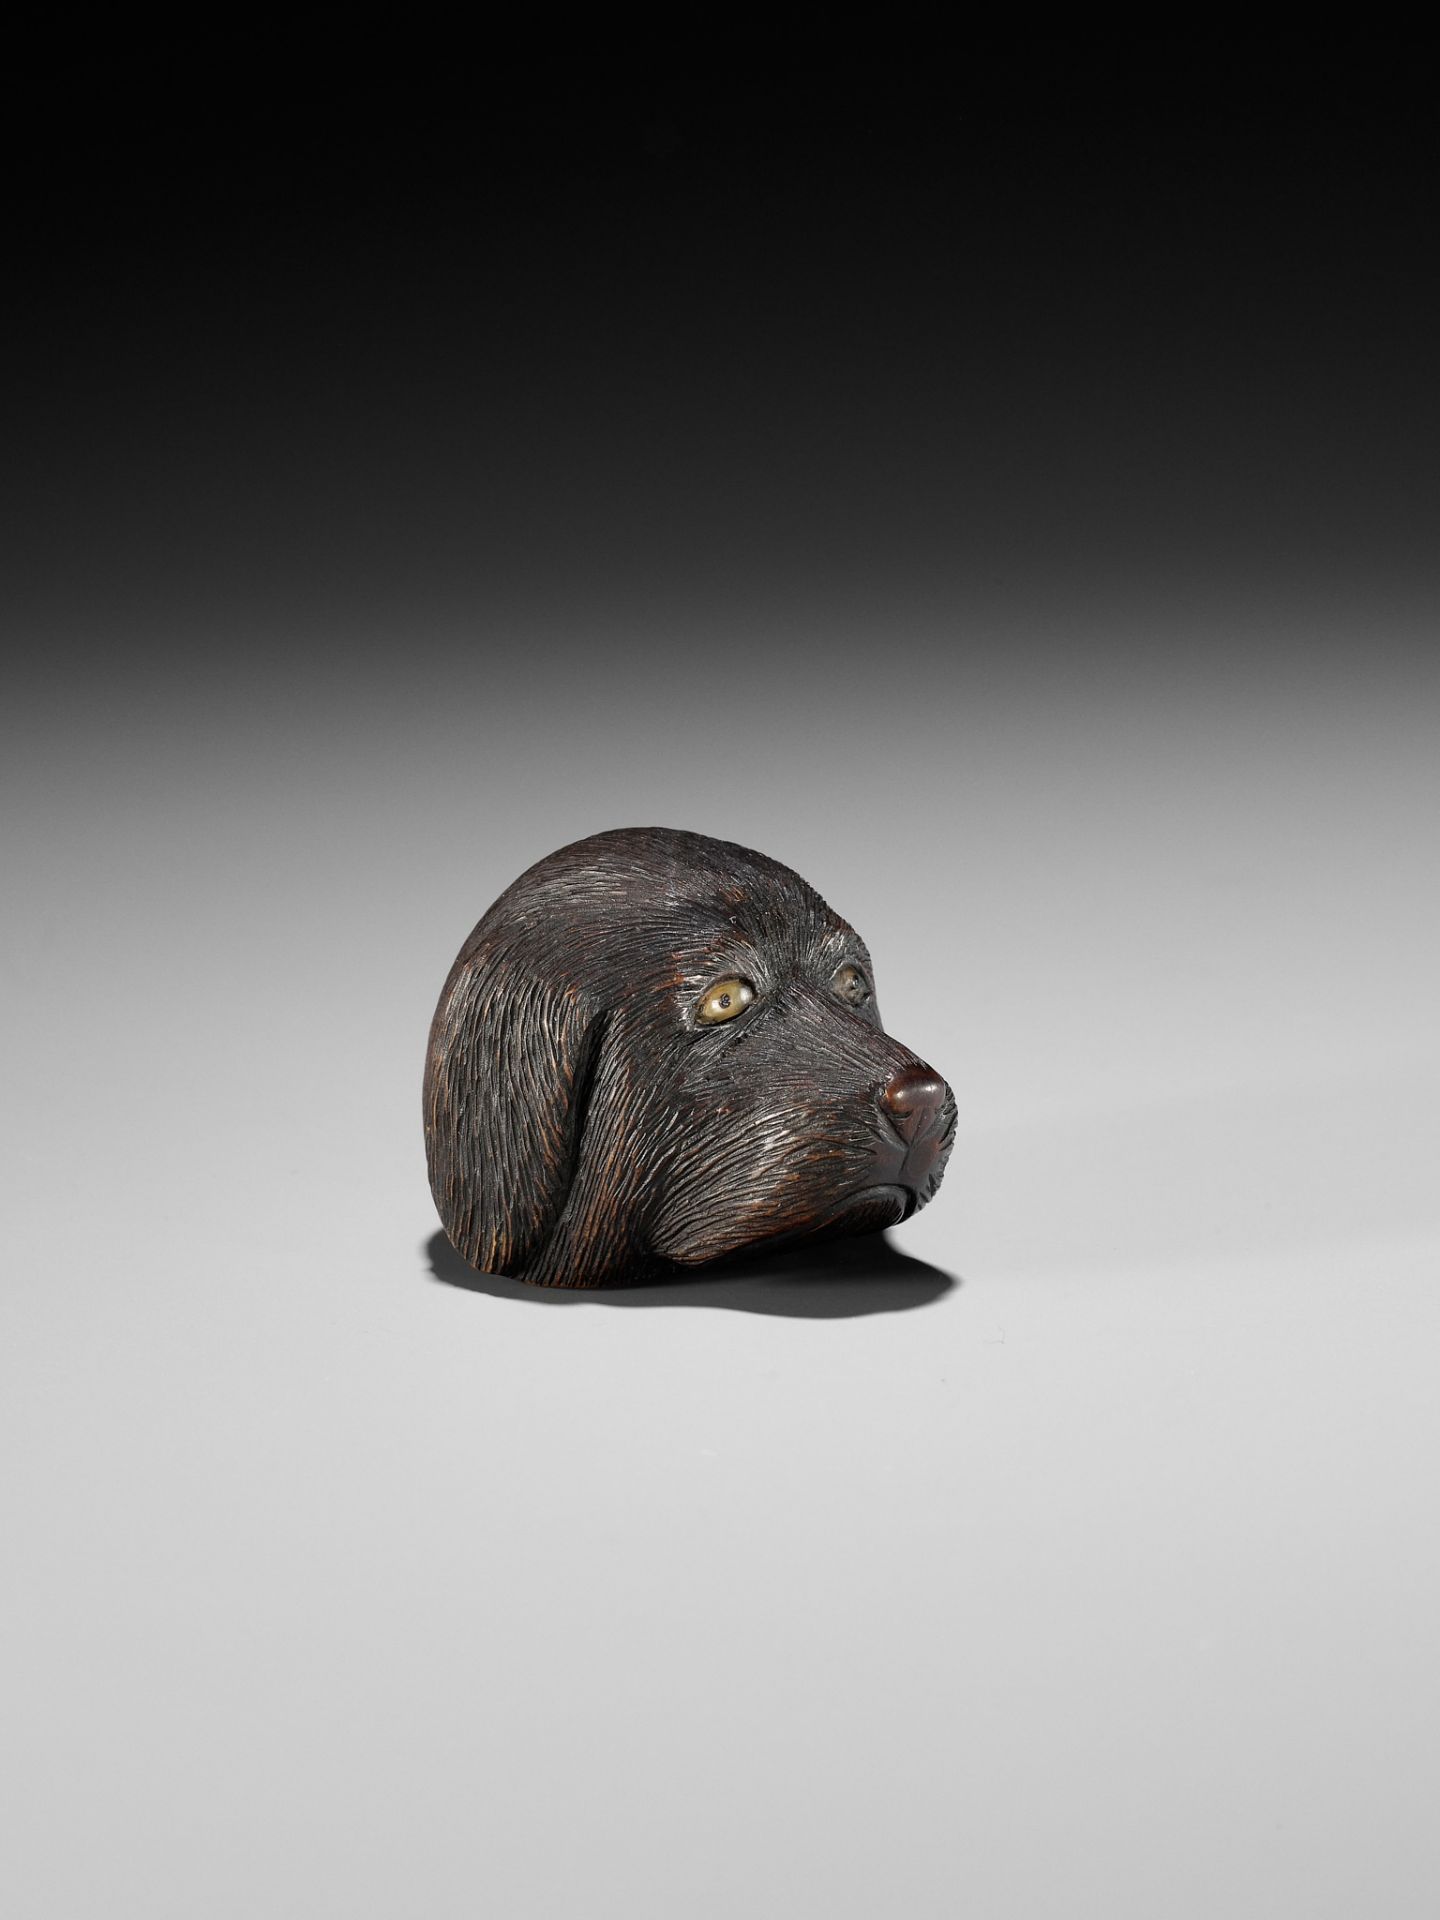 CHIKUSAI: A RARE WOOD NETSUKE DEPICTING THE HEAD OF A DOG - Image 9 of 12